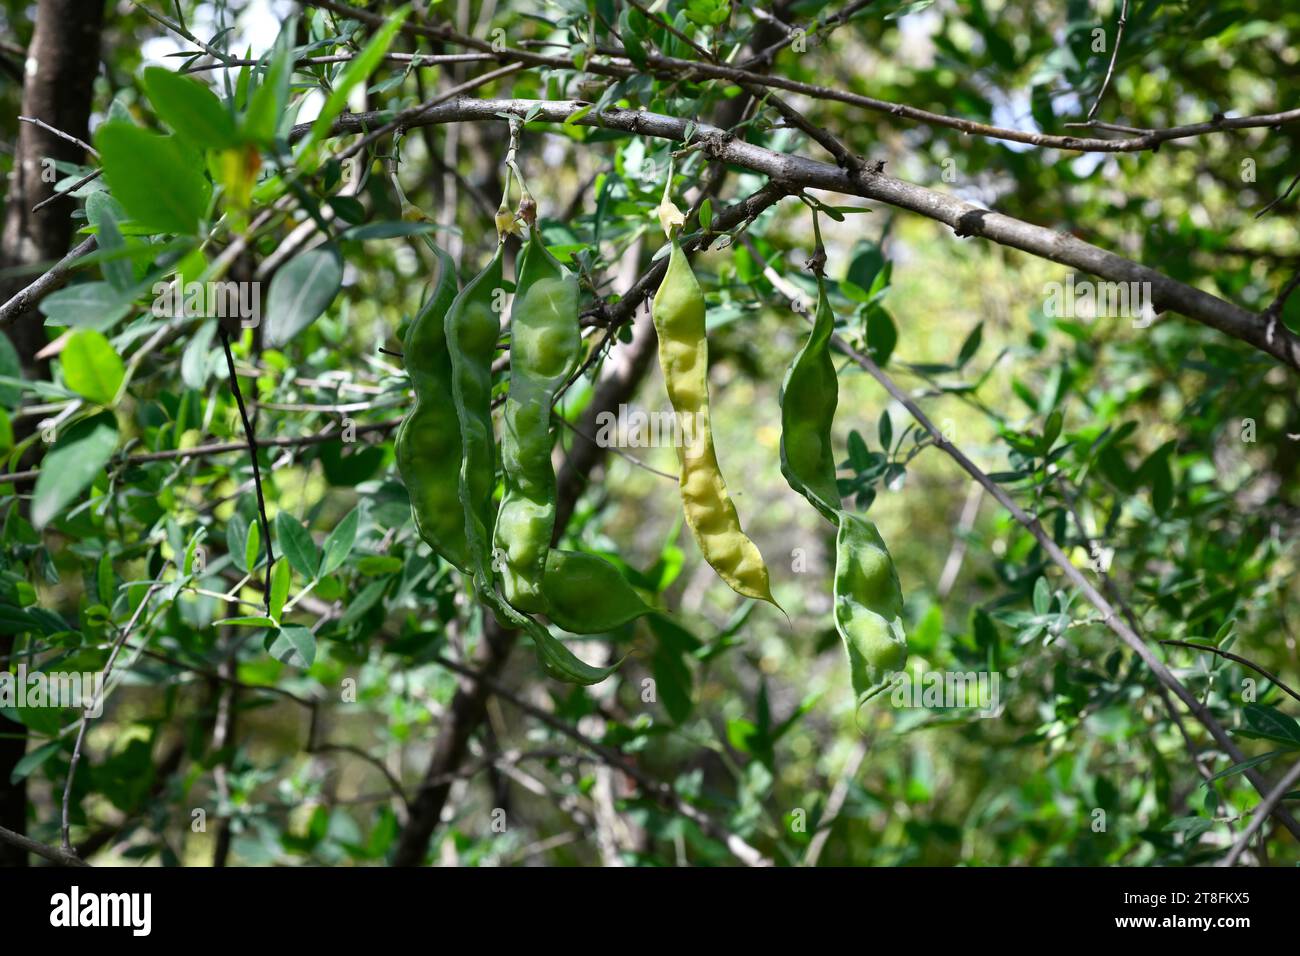 Stinking bean trefoil (Anagyris foetida) is a medicinal and toxic shrub native to Mediterranean basin. Fruits detail. This photo was taken in Cadiz, A Stock Photo